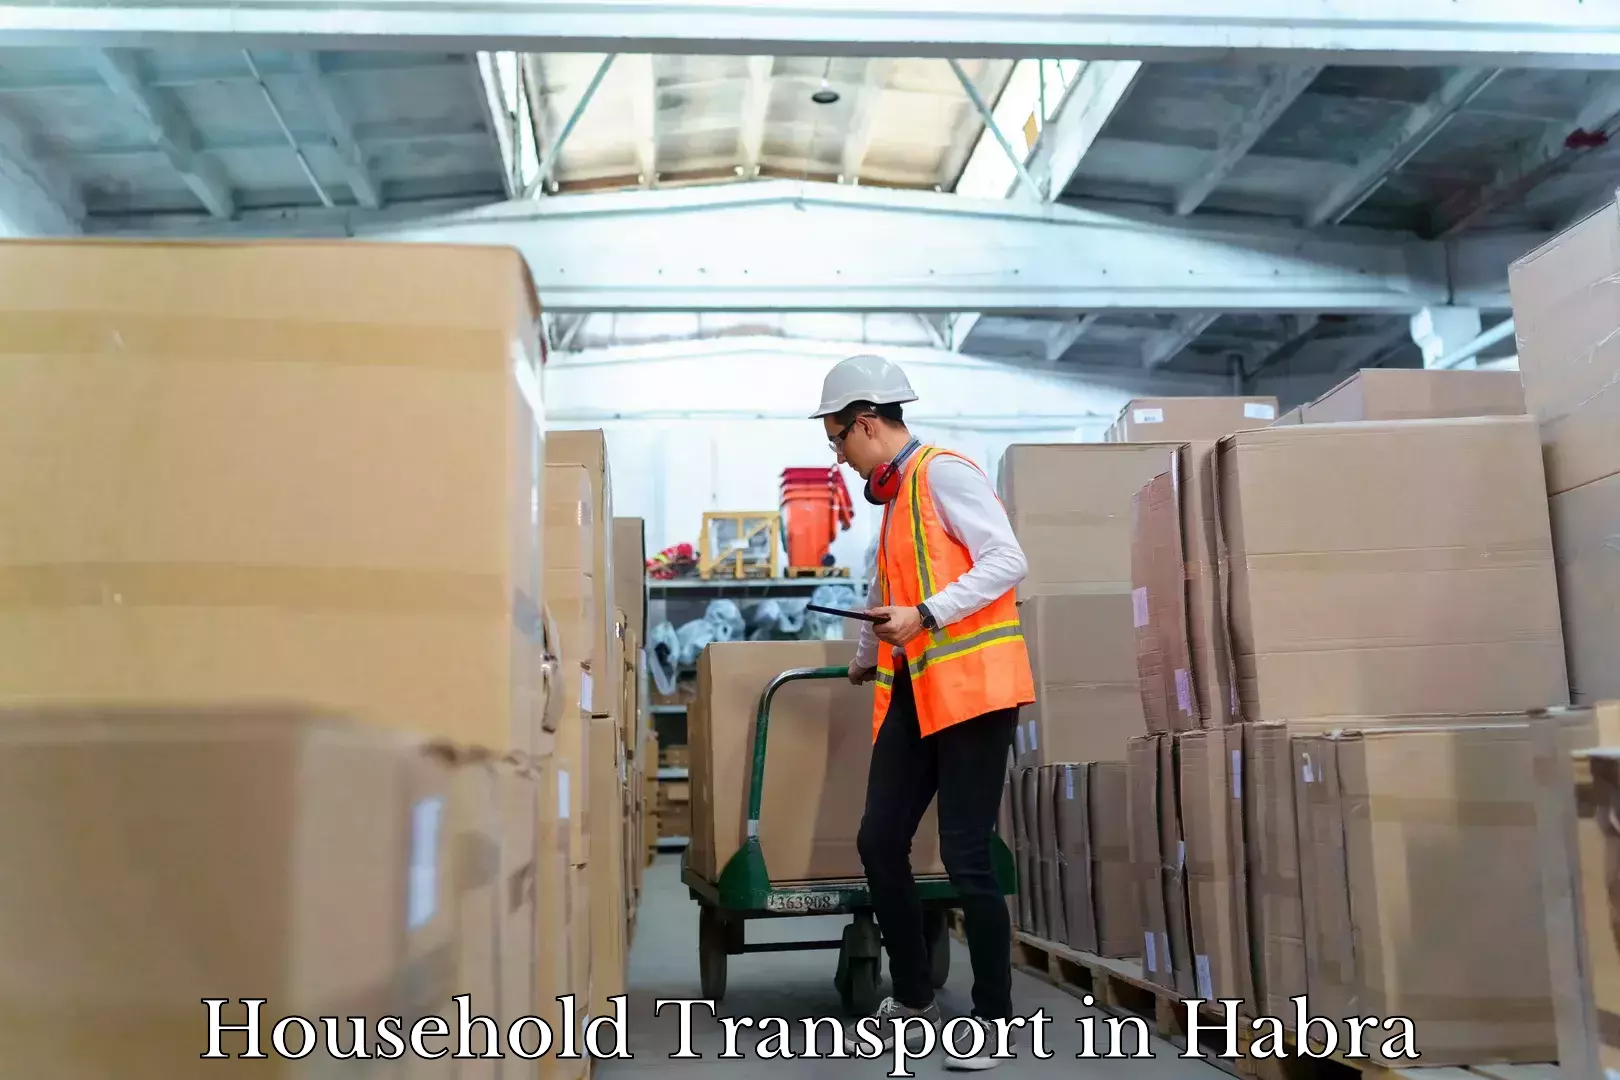 Furniture delivery service in Habra